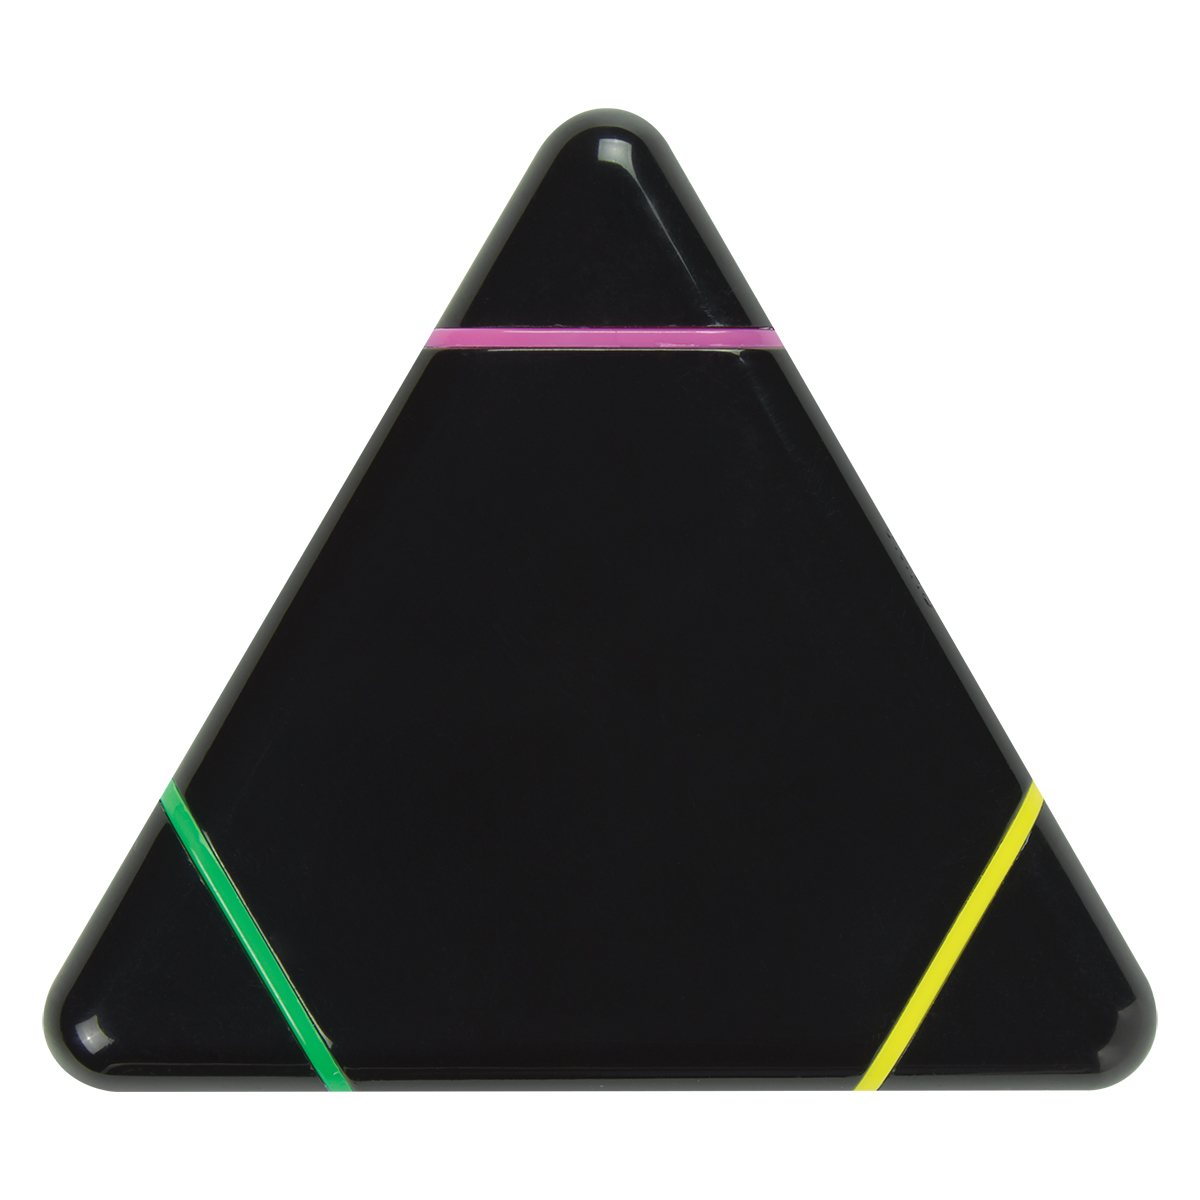 333 - Marcatextos Triangular de Plástico